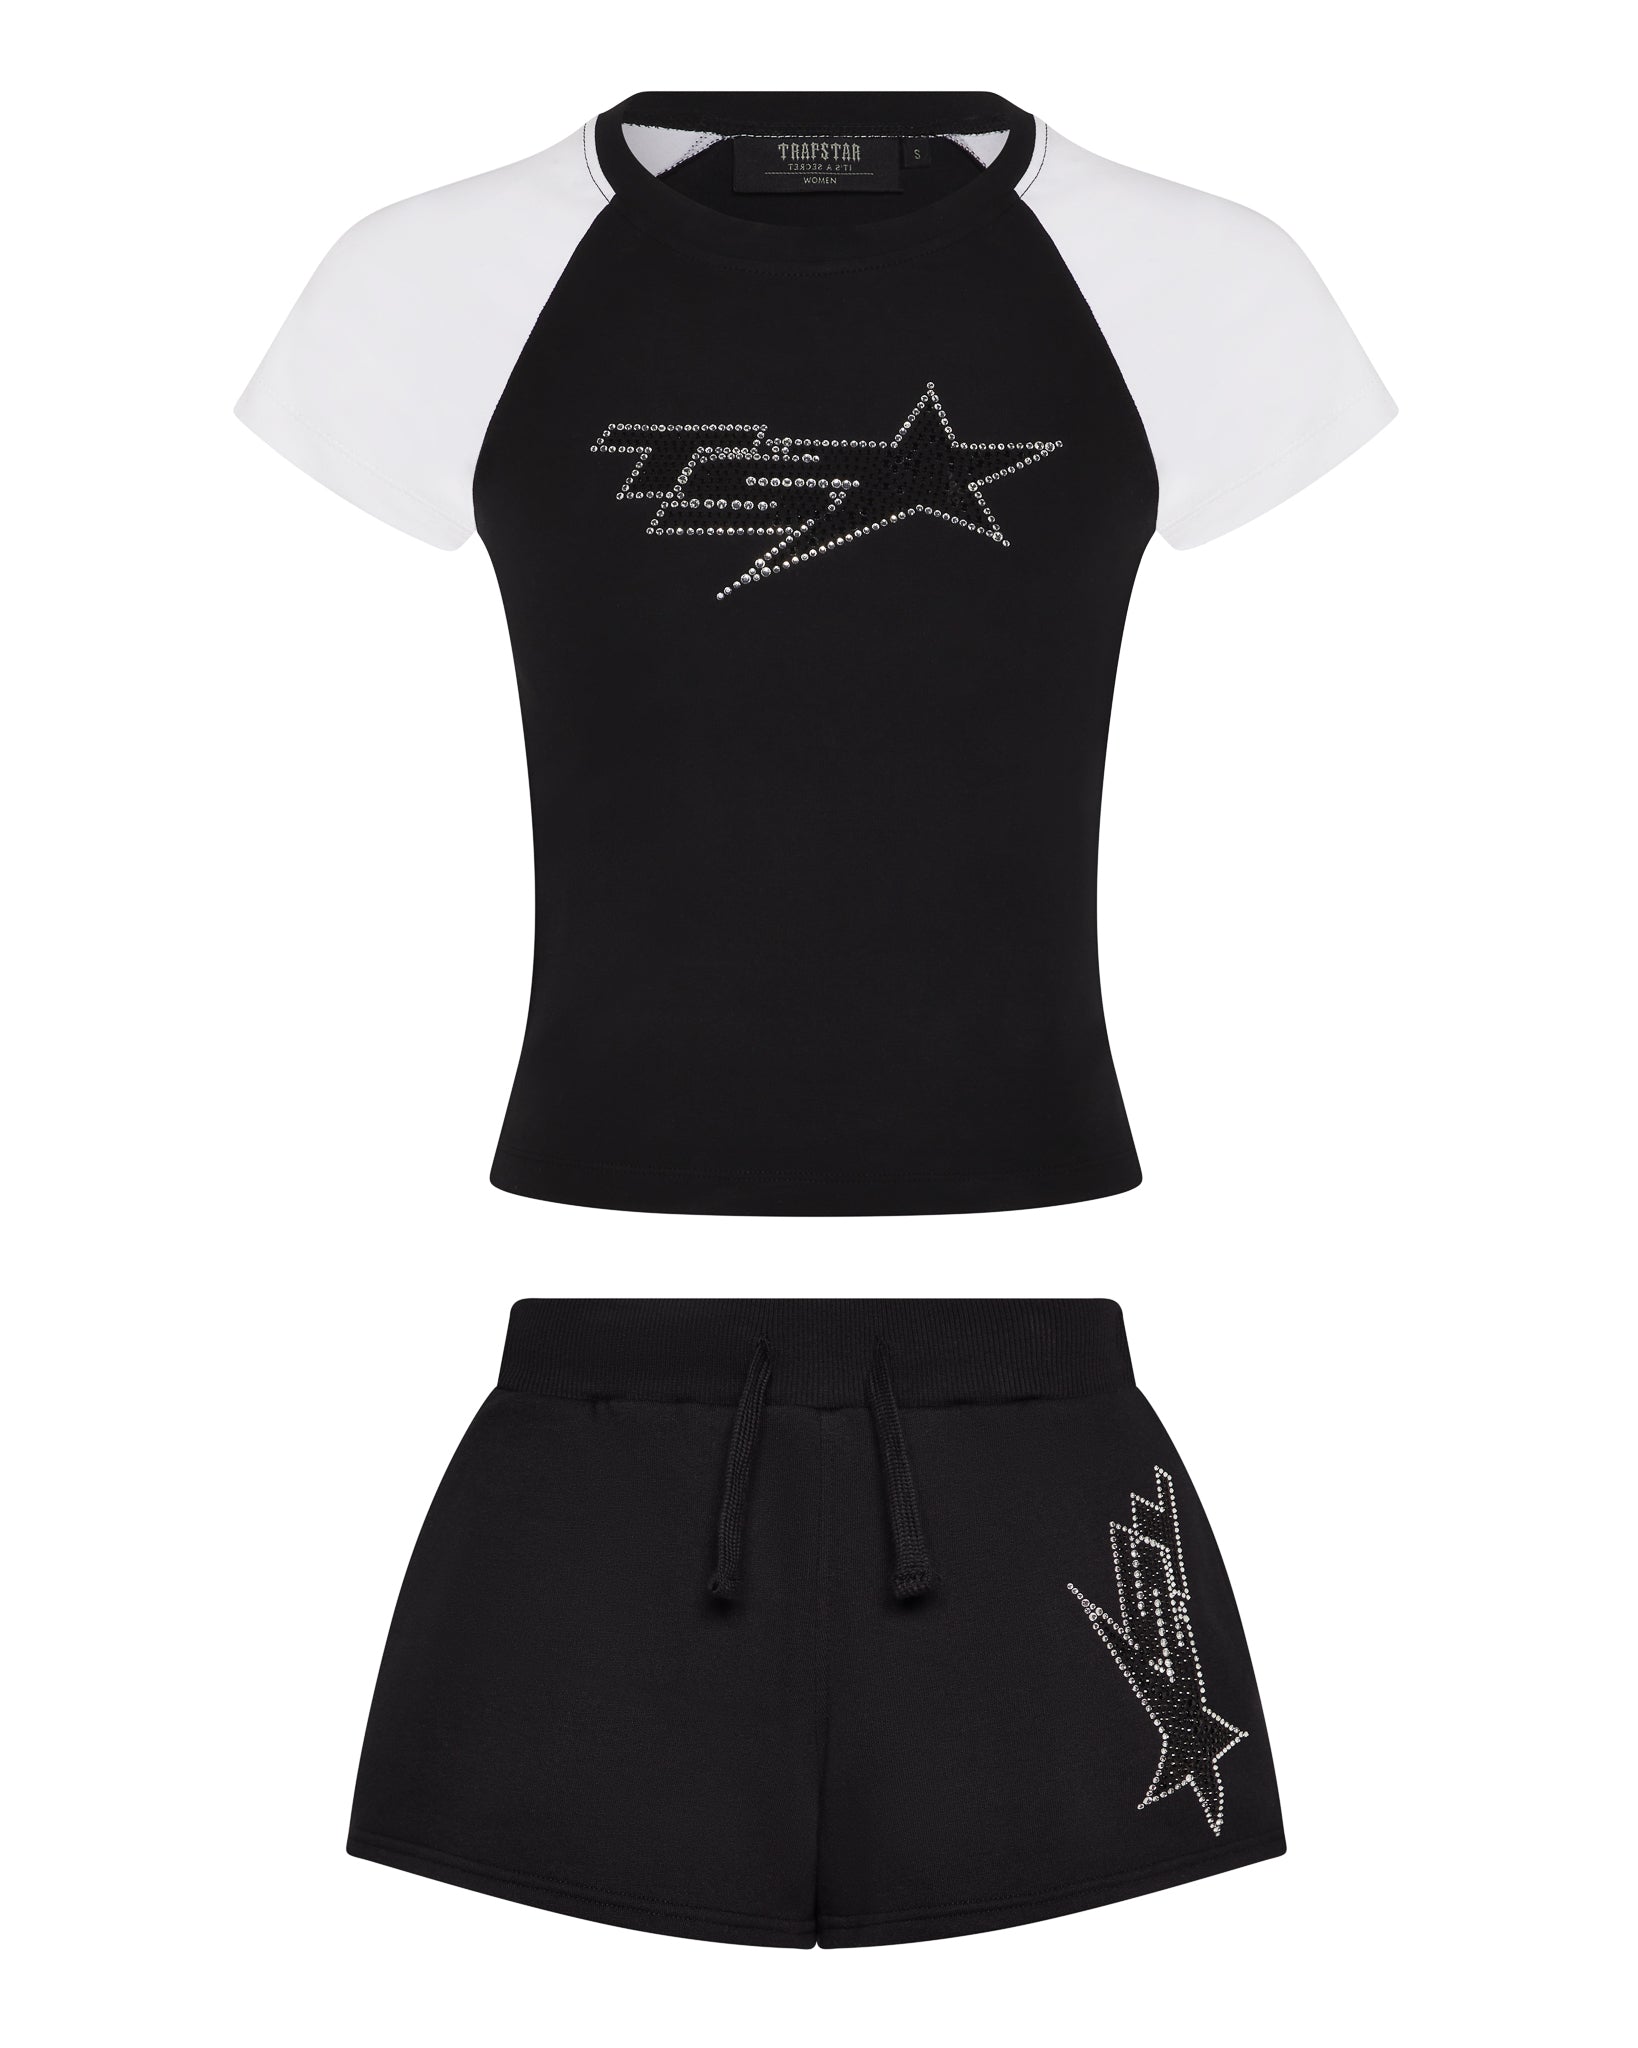 Women's TS Star Diamante Shorts - Black